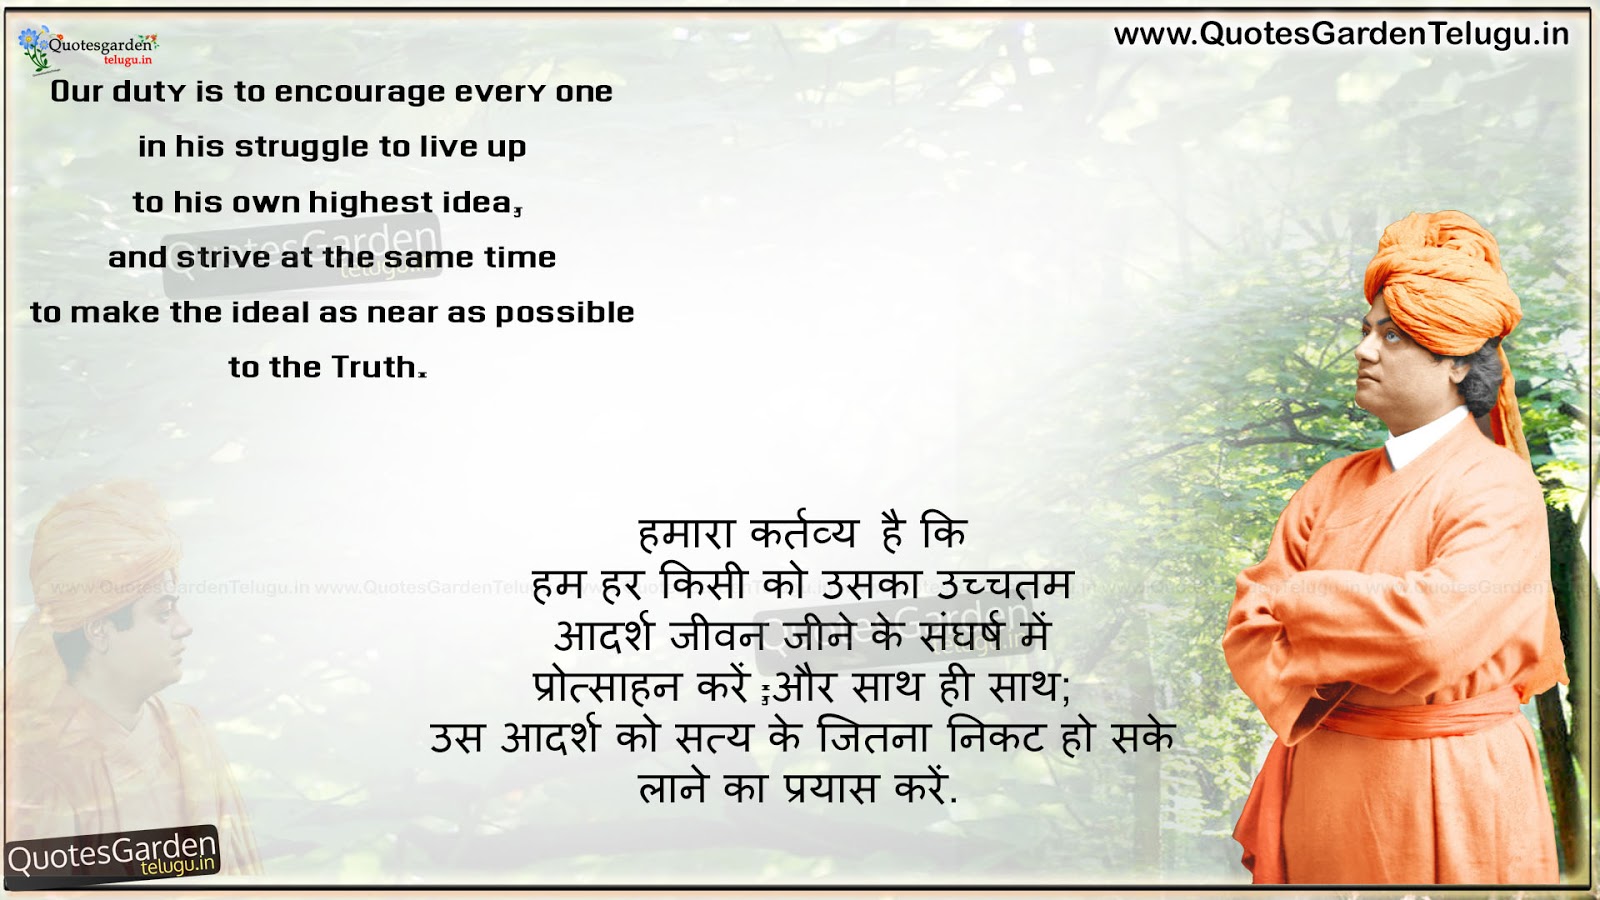 swami-vivekananda-quotes-in-english-and-hindi-1754-quotes-garden-telugu-telugu-quotes